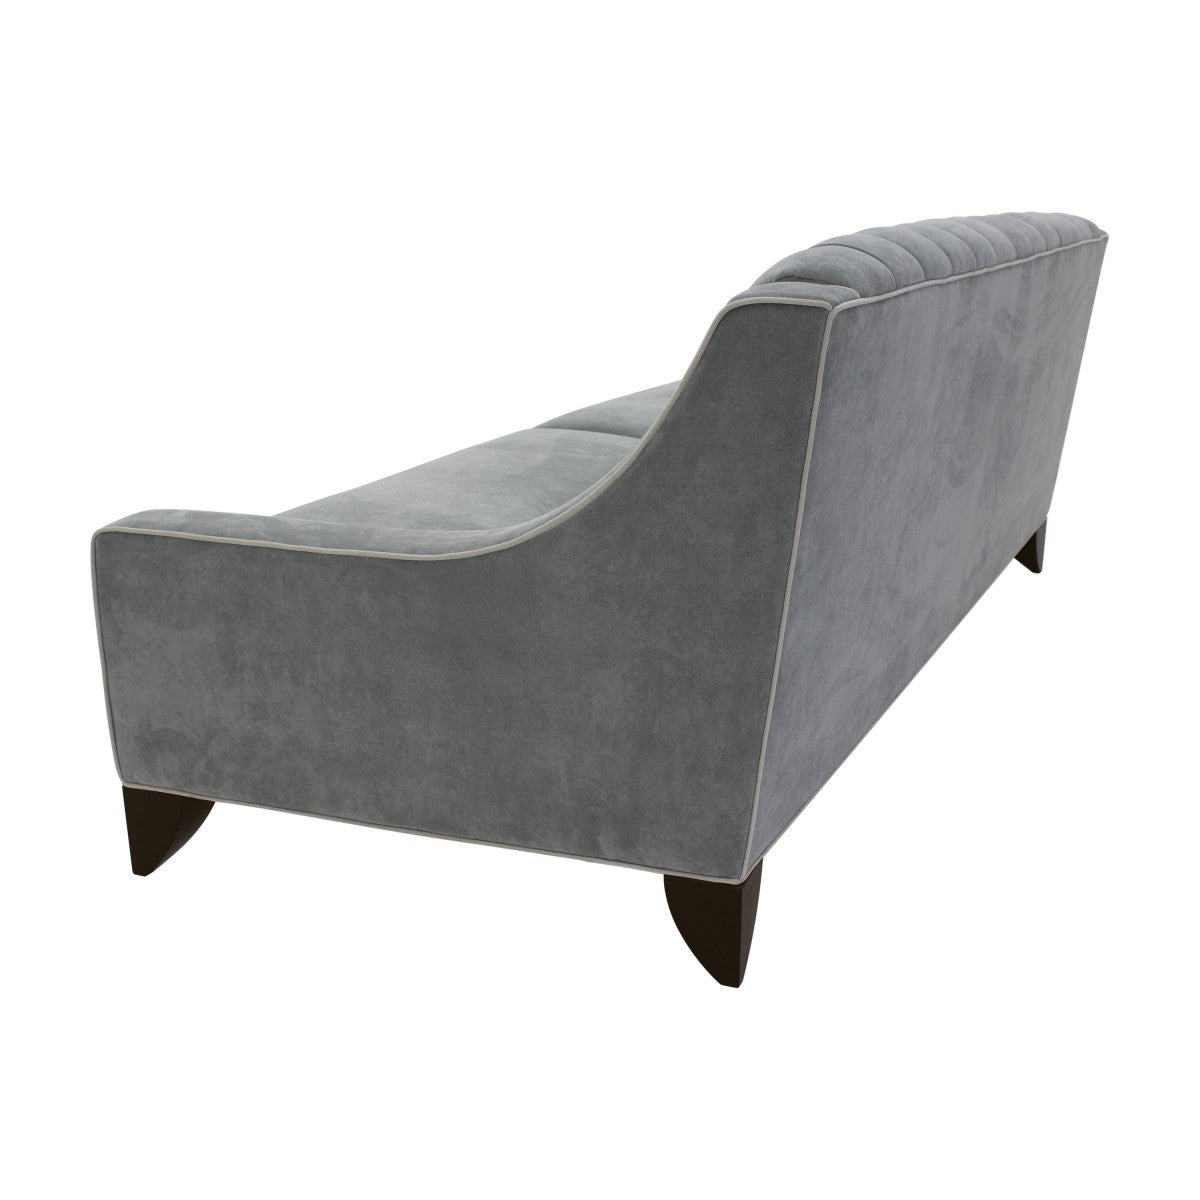 Giunone Bespoke Upholstered Modern Style Four Seater Sofa MS9790F Custom Made To Order